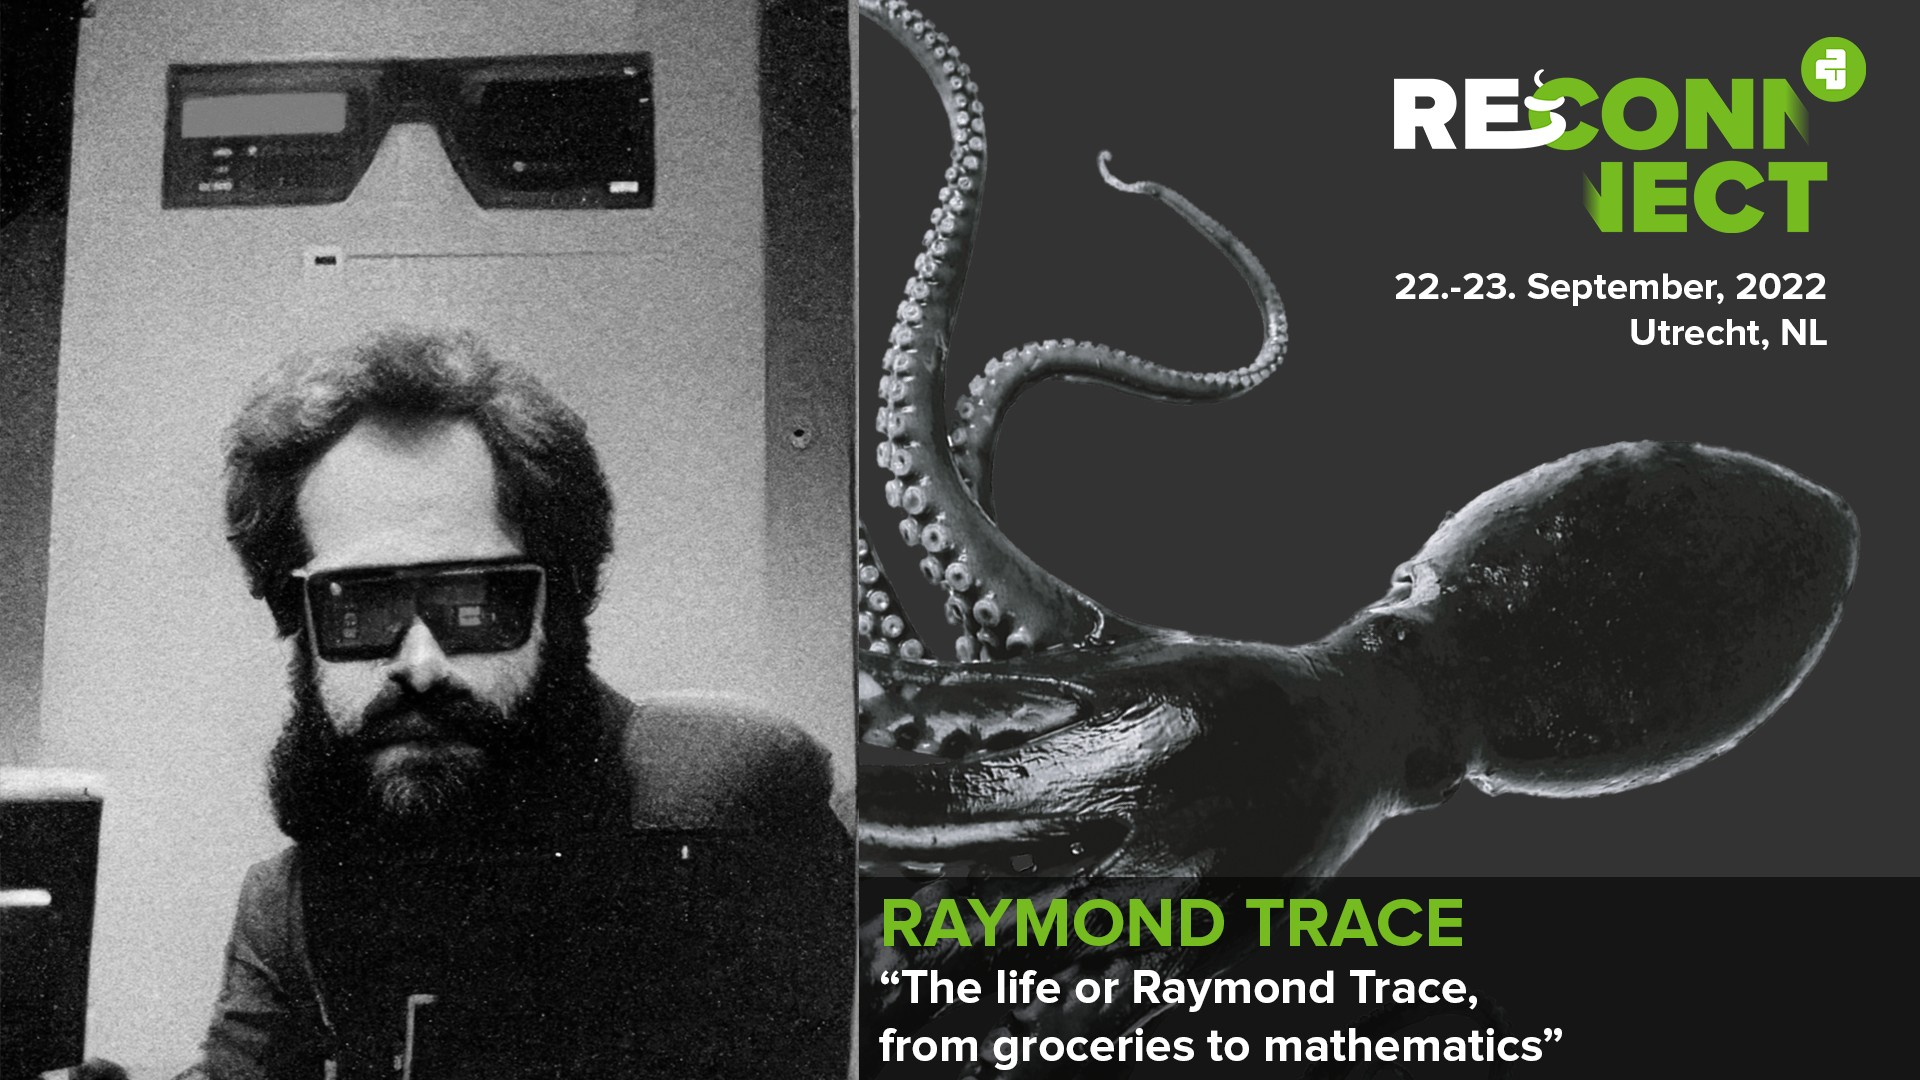 Raymond Trace